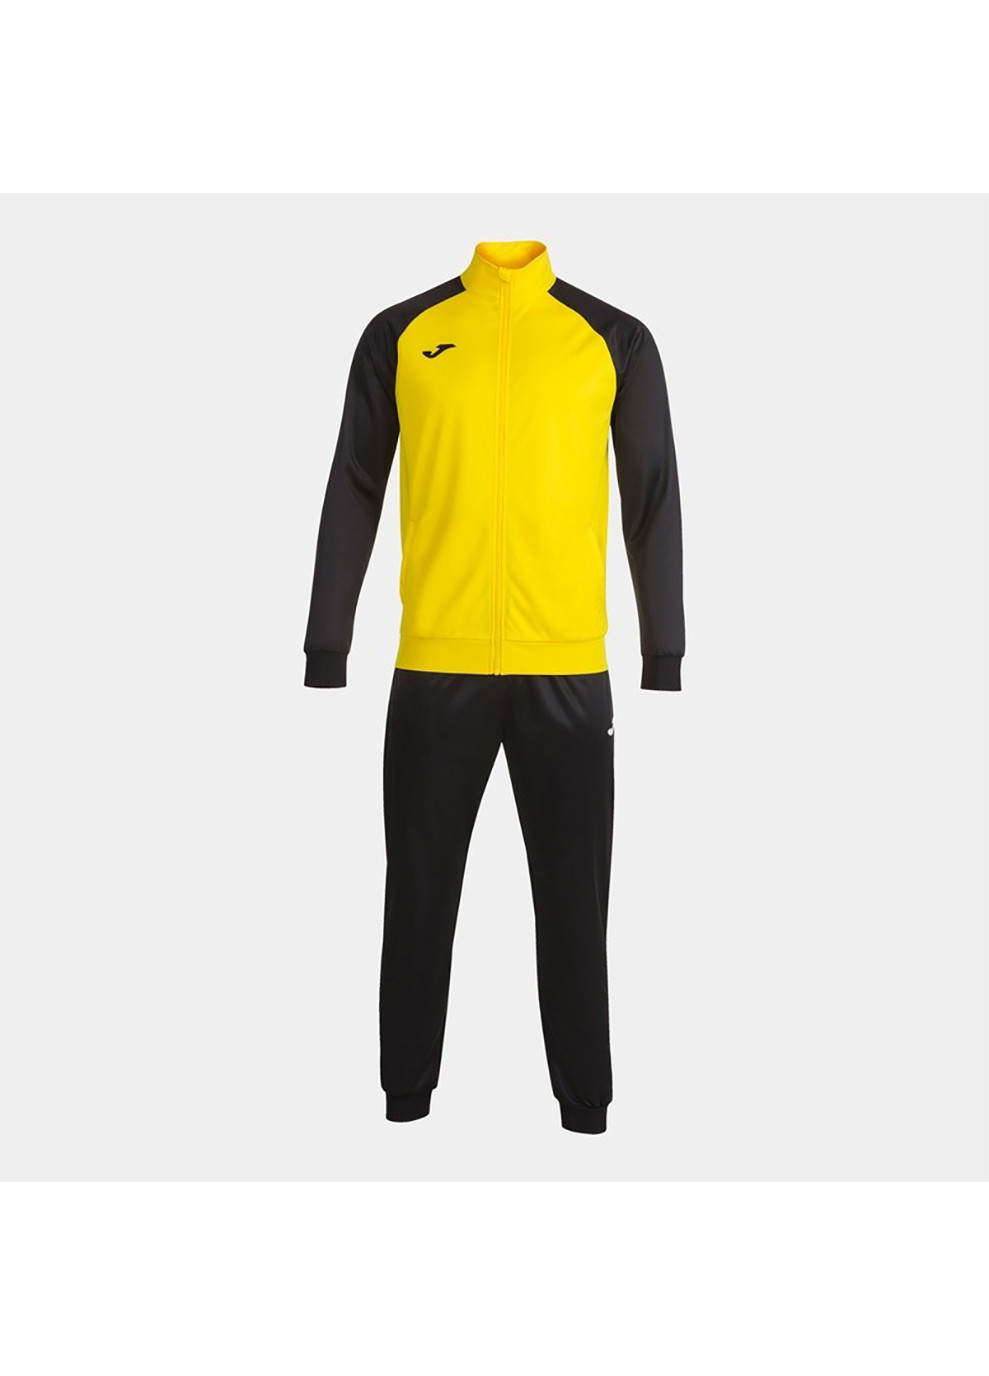 Спортивный костюм ACADEMY IV TRACKSUIT желтый,черный Joma (260646872)